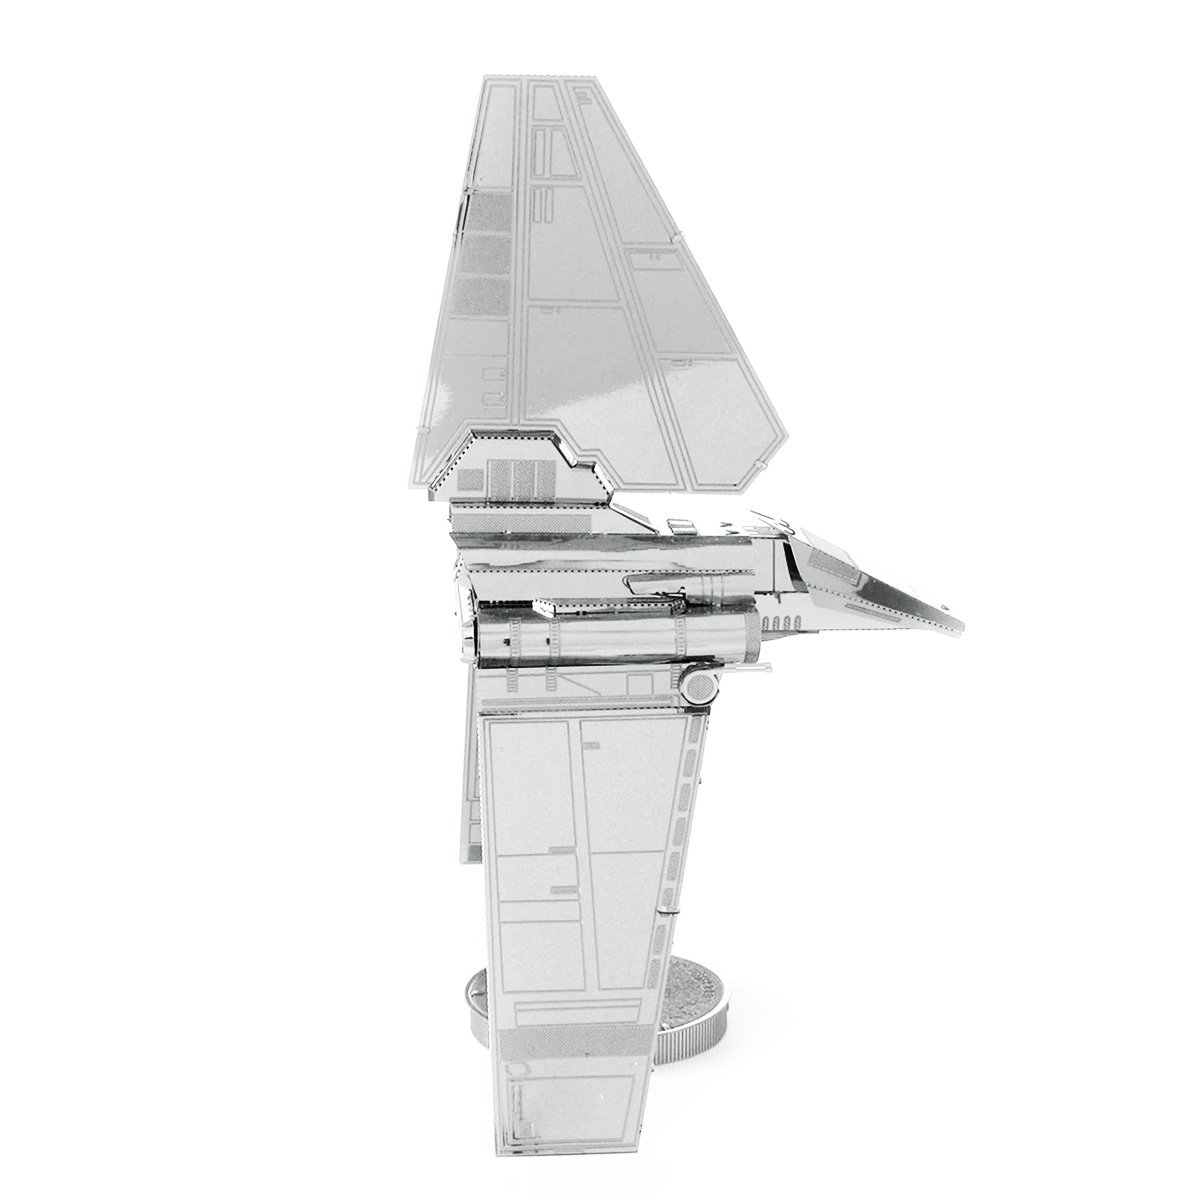 Star Wars Imperial Shuttle 3D Puzzle Metall Modell Laser Cut Bausatz 